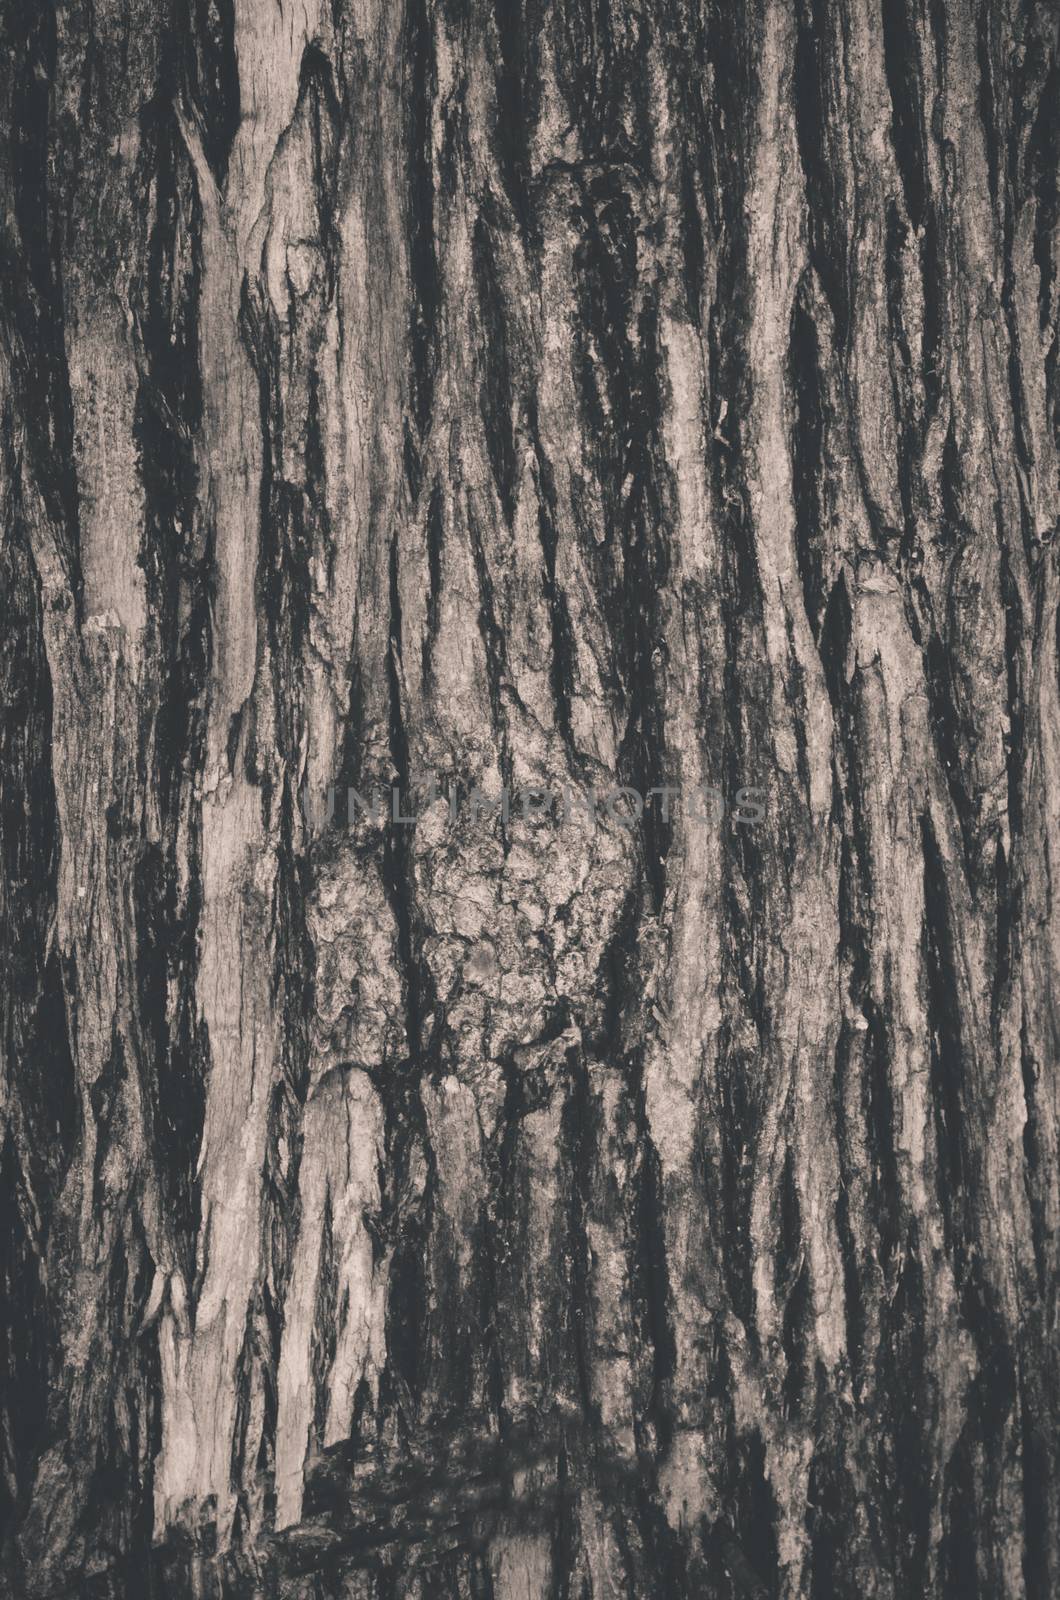 Tree bark texture by photobyphotoboy